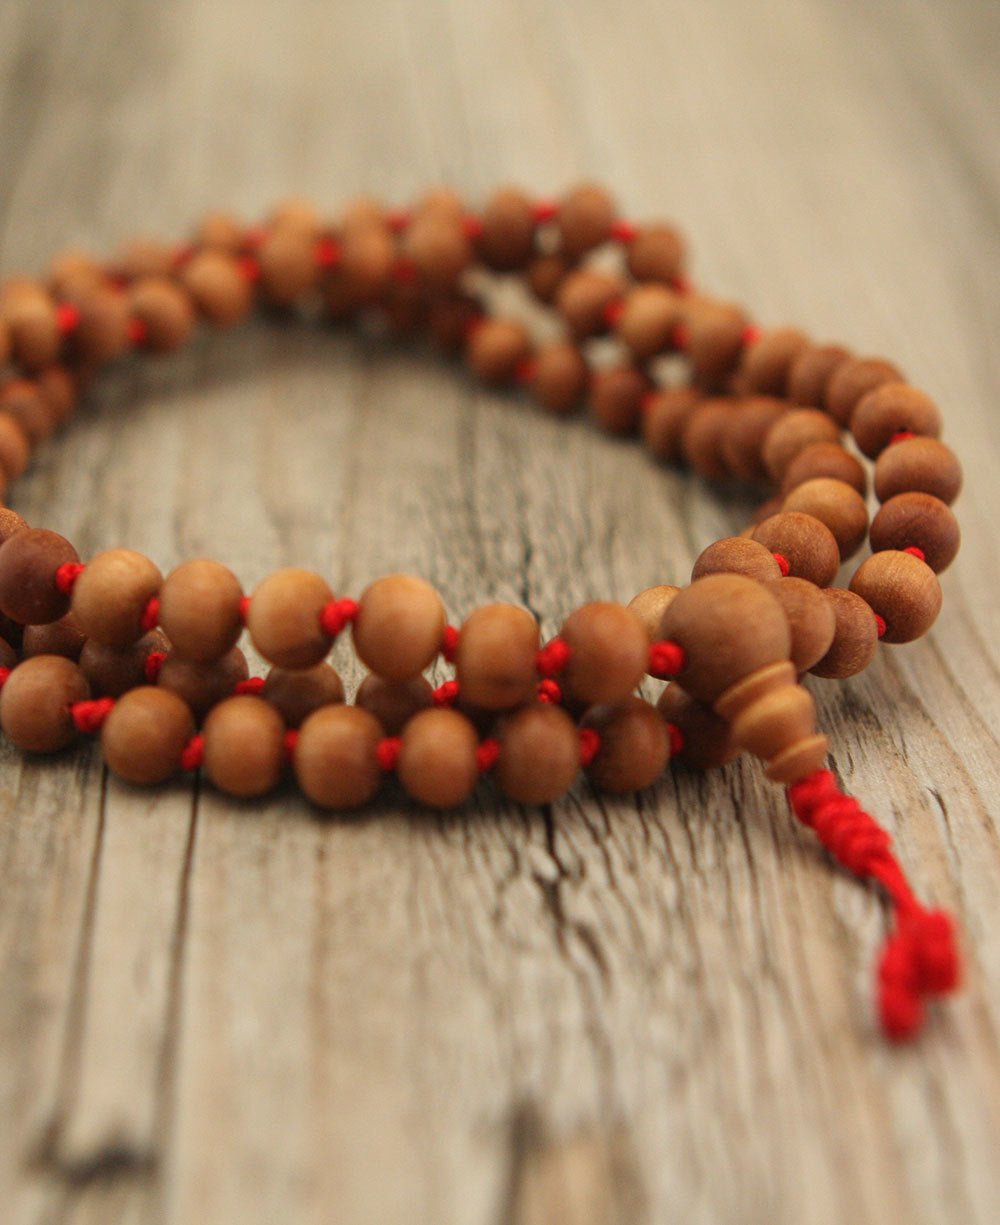 108 Beads SandalWood Mala - Meditation Mala